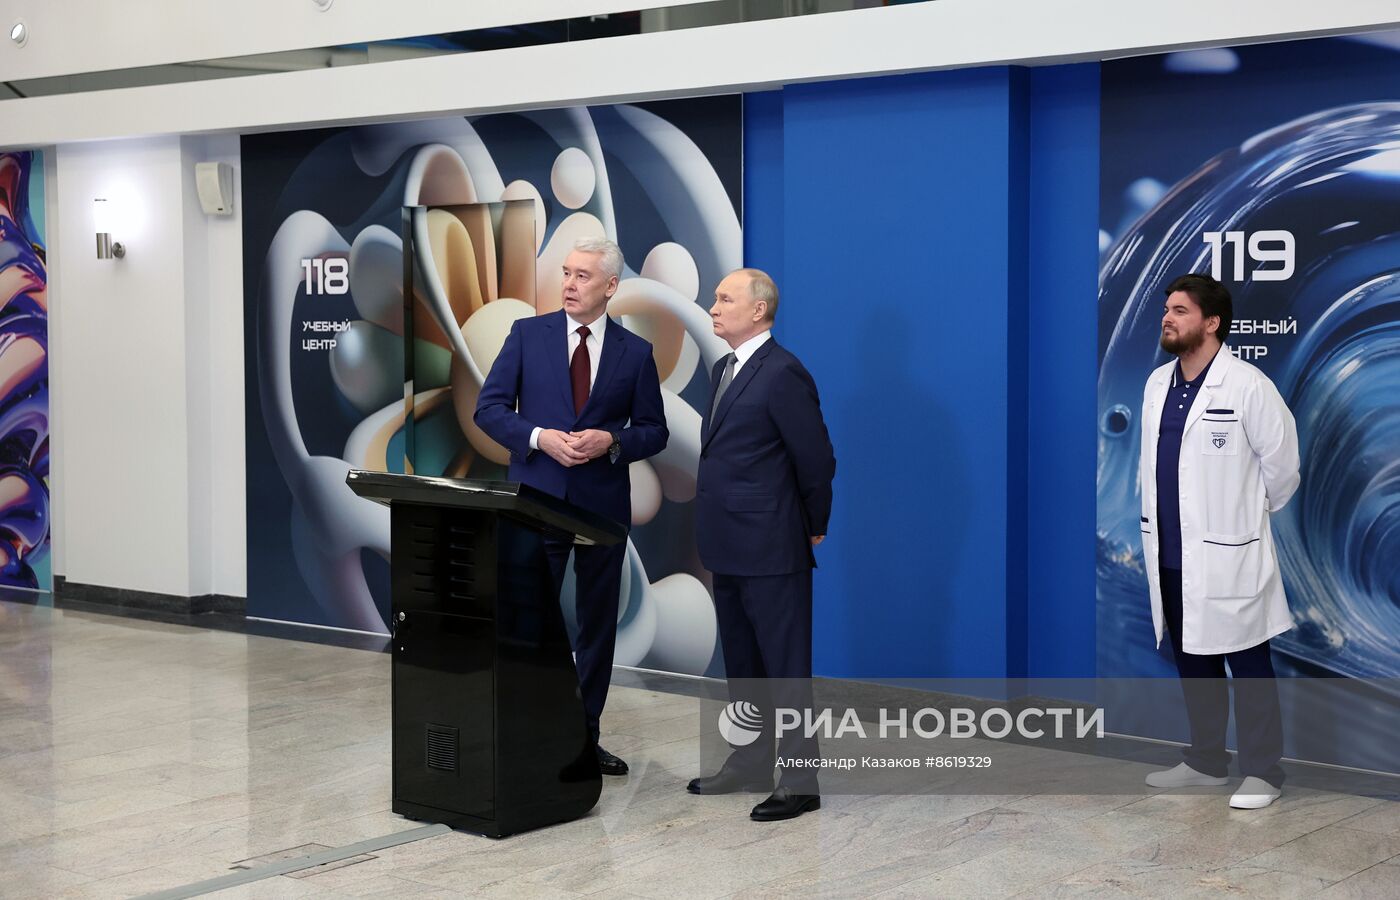 Президент РФ В. Путин посетил ГБУЗ "Научно-практический клинический центр диагностики и телемедицинских технологий